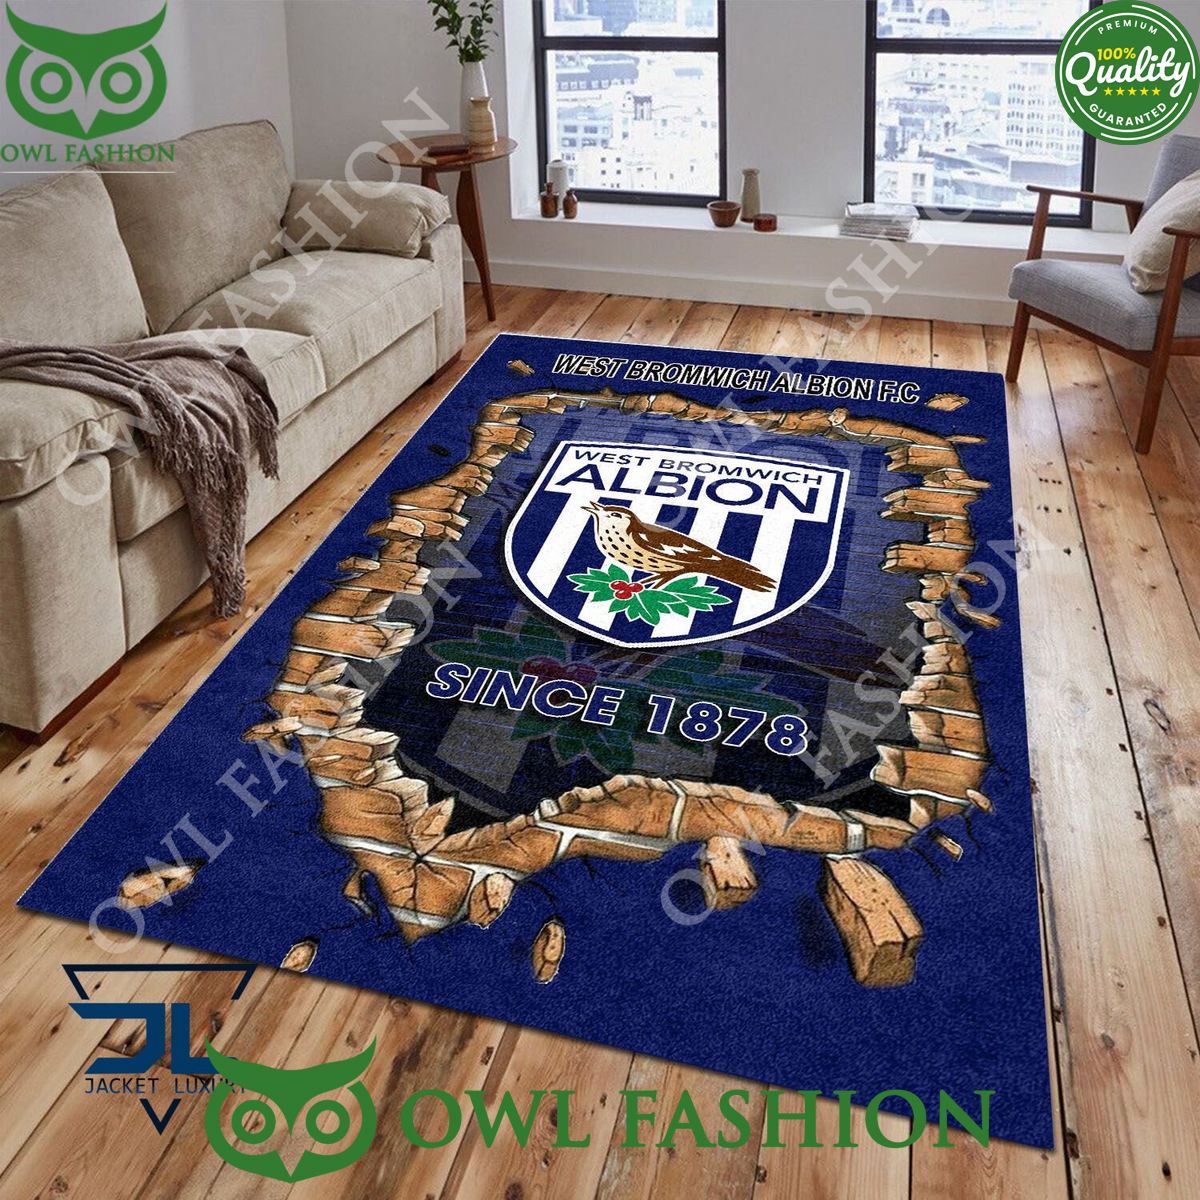 football west bromwich albion f c 1817 epl living room rug carpet 1 nnlA3.jpg